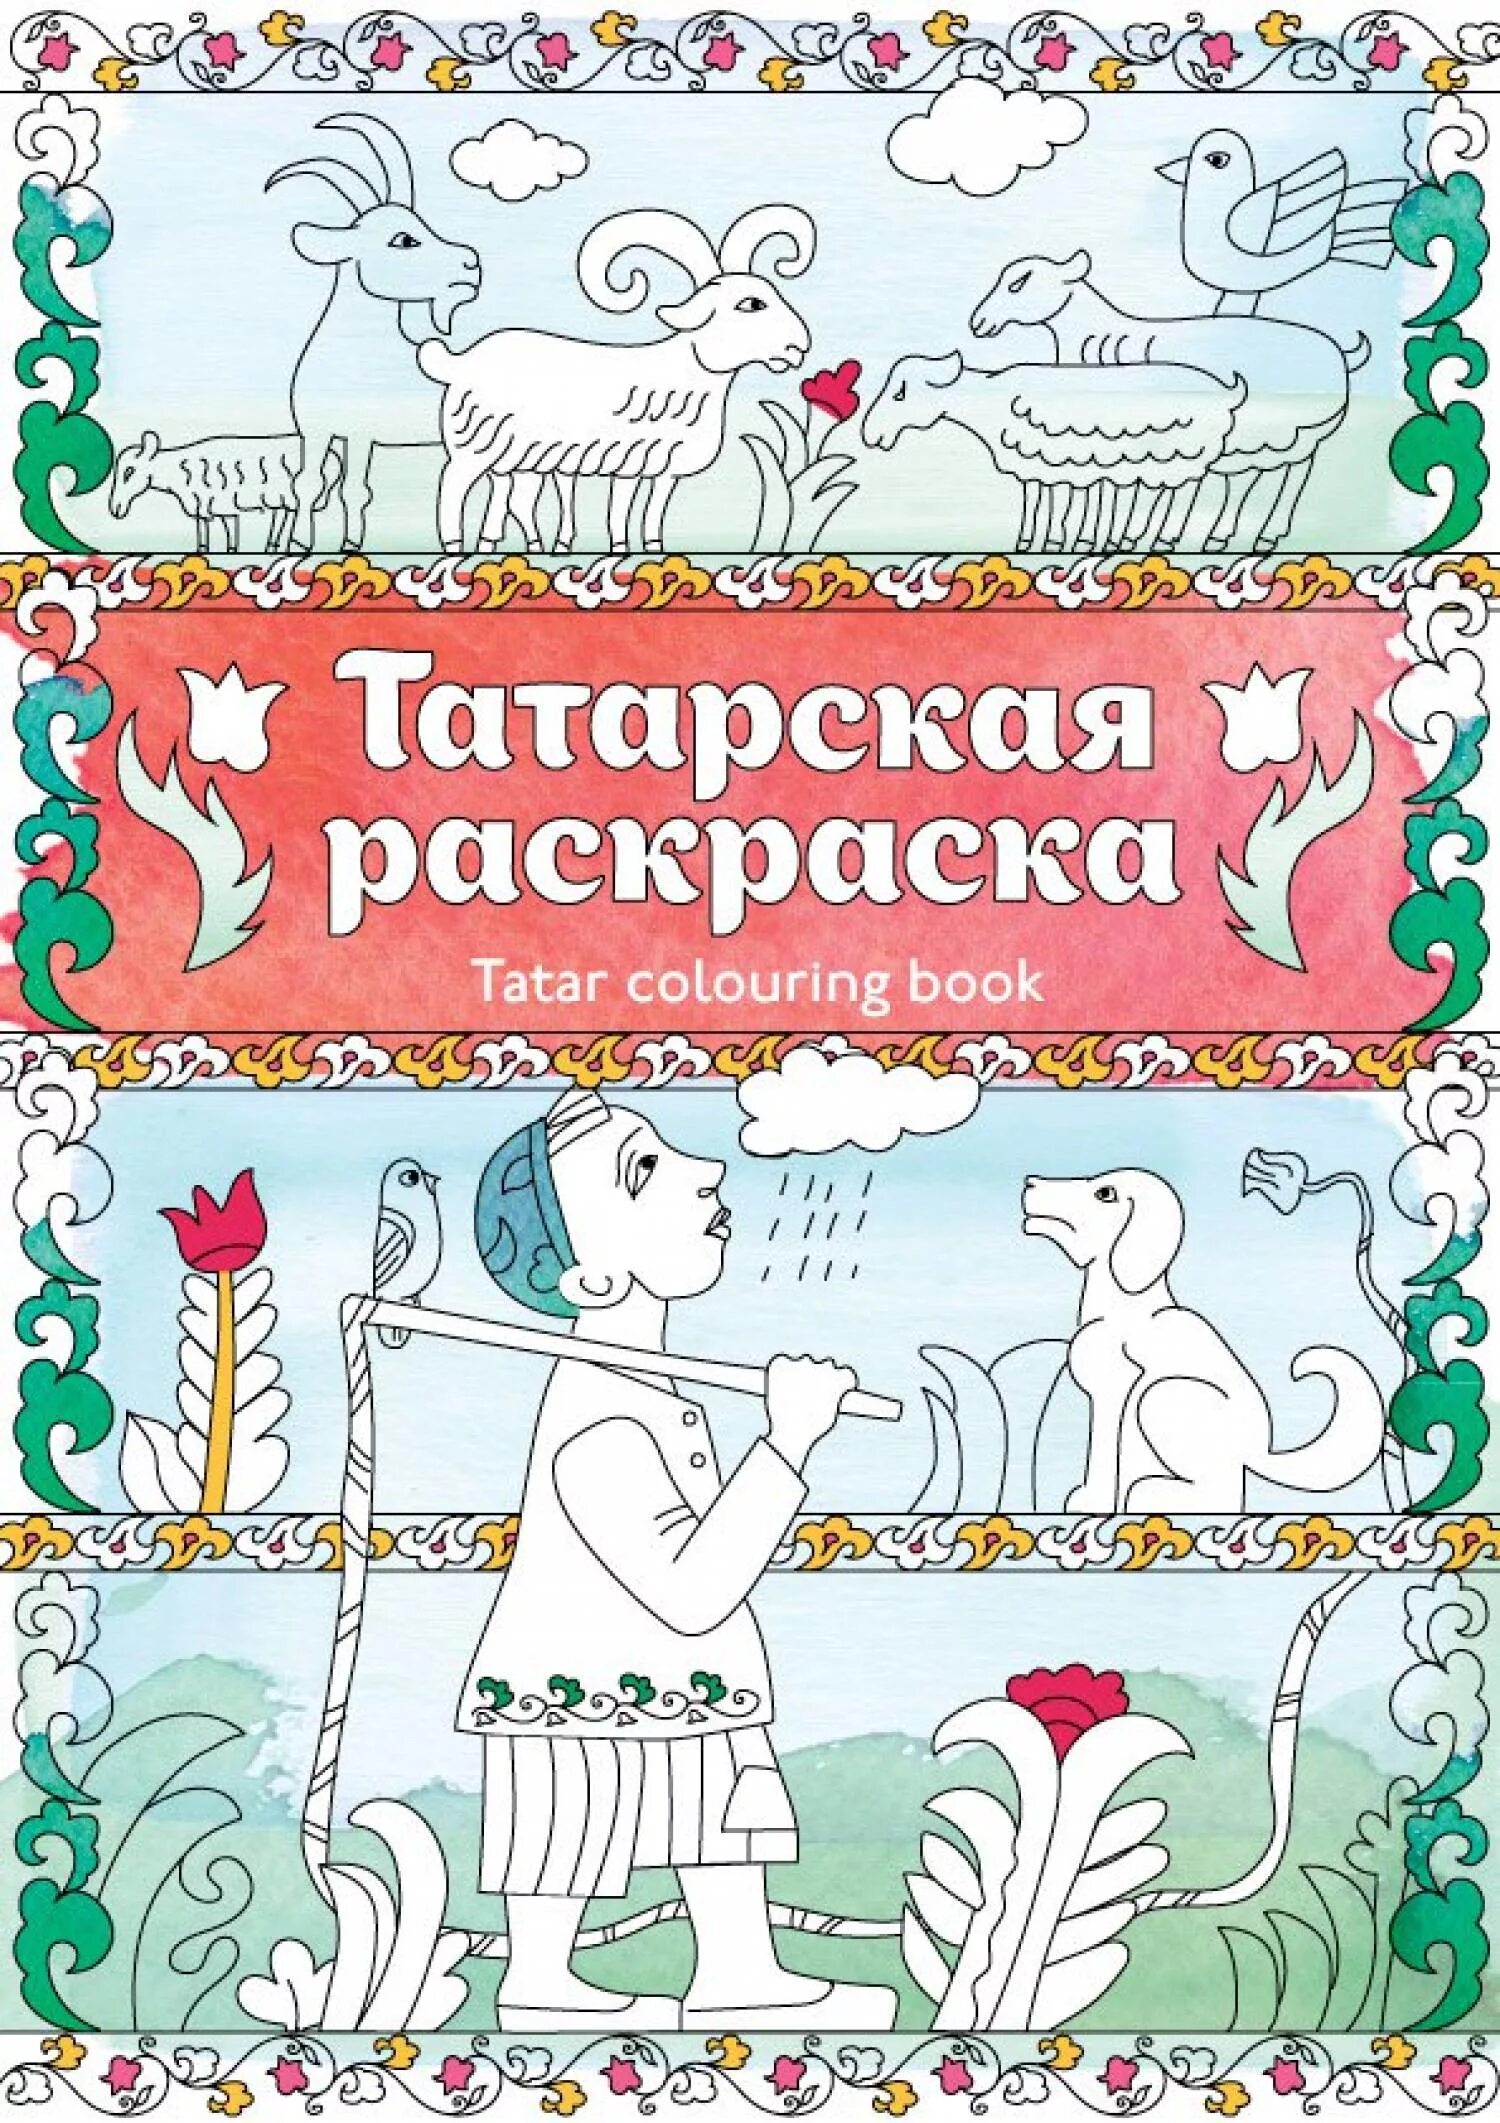 Amazing Tatar coloring